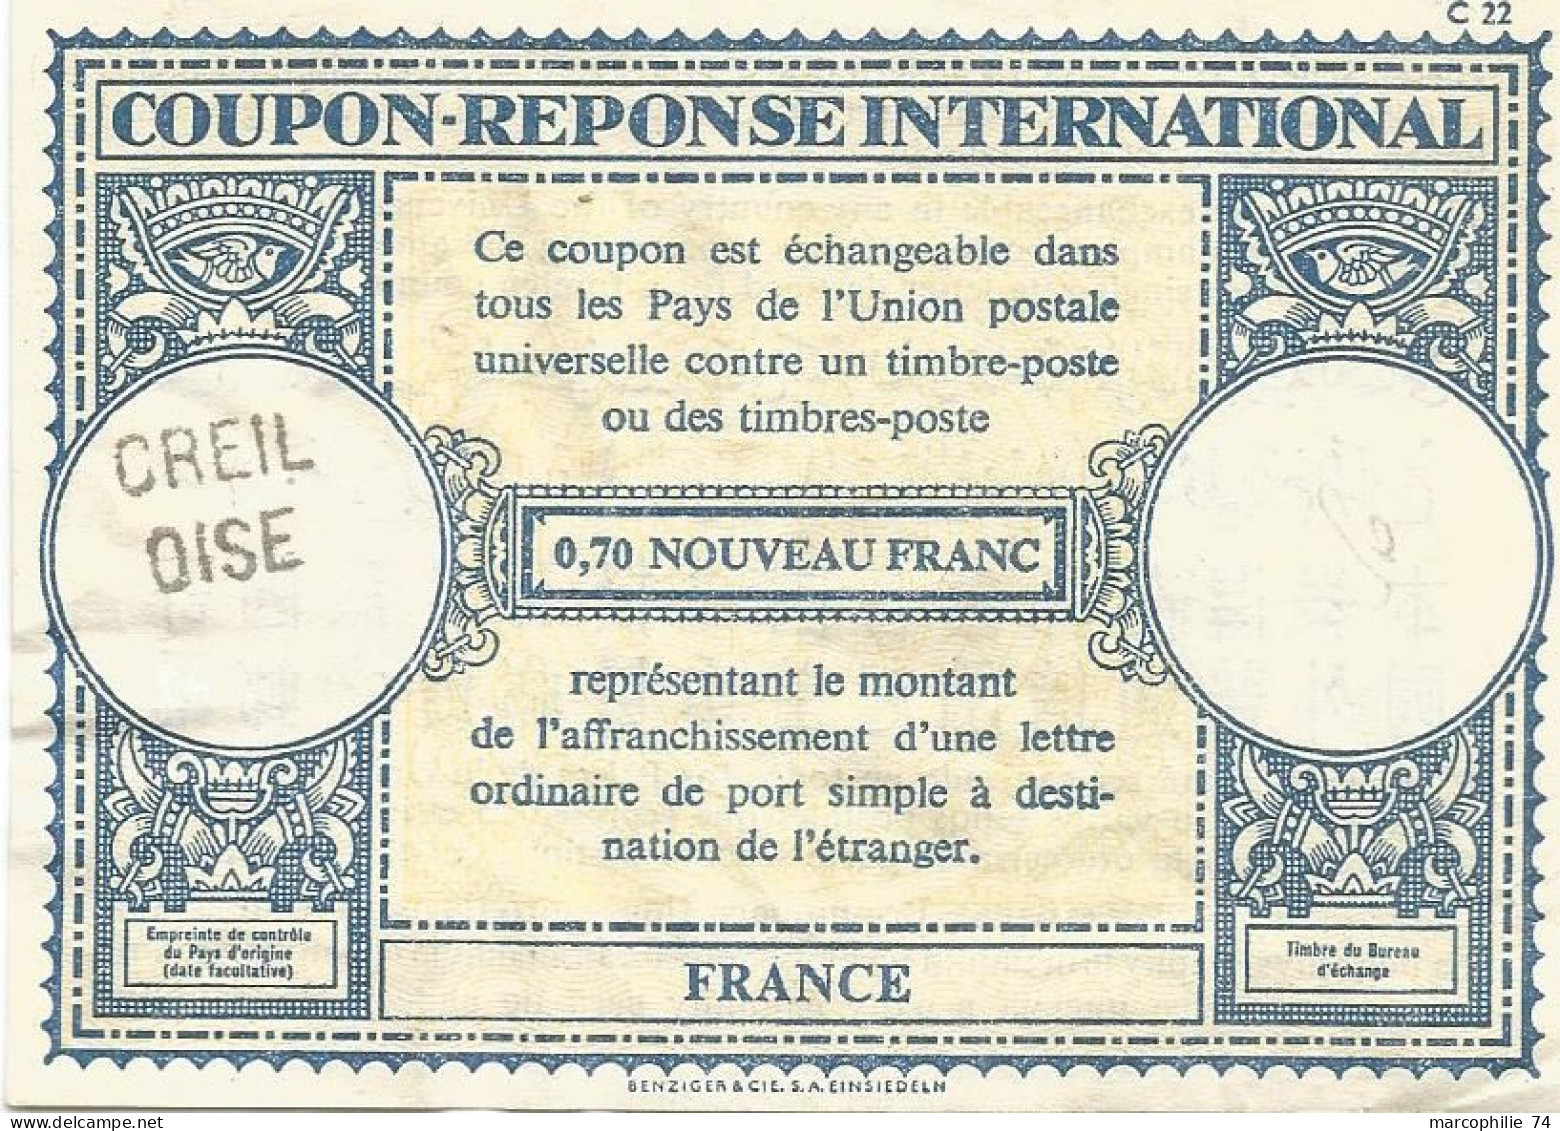 COUPON REPONSE INTERNATIONAL FRANCE 0.70 NOUVEAU FRANC GRIFFE CREIL OISE - Antwortscheine